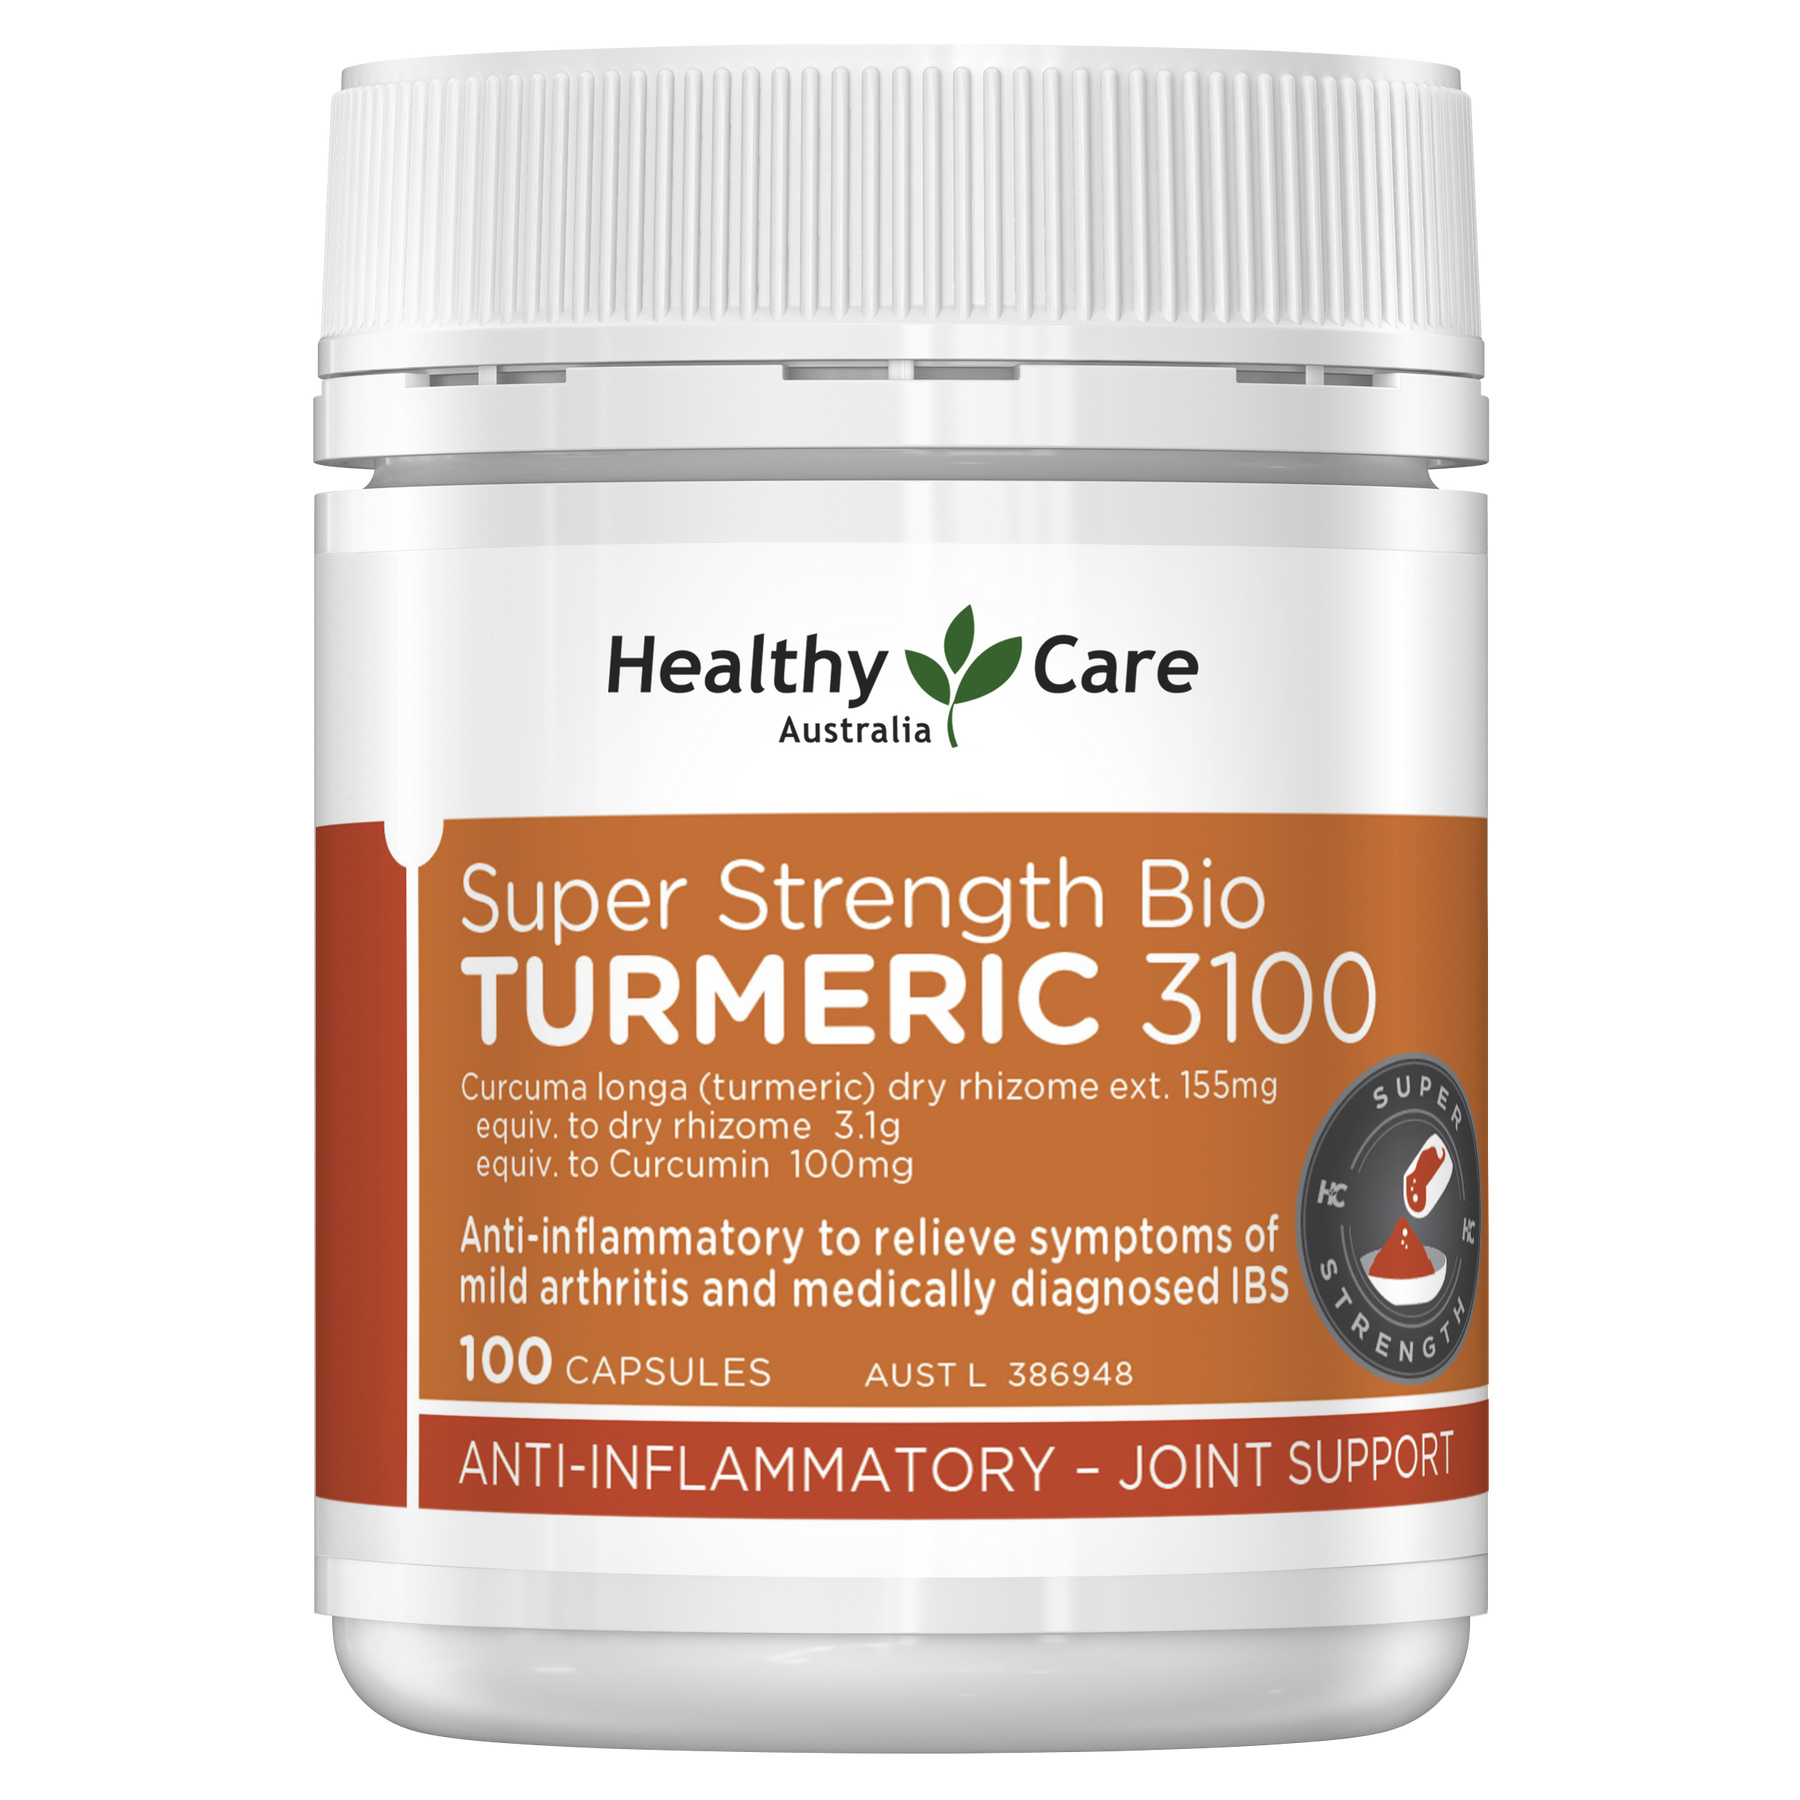 Healthy Care Super Strength Bio Turmeric 3100 - 100 Capsules